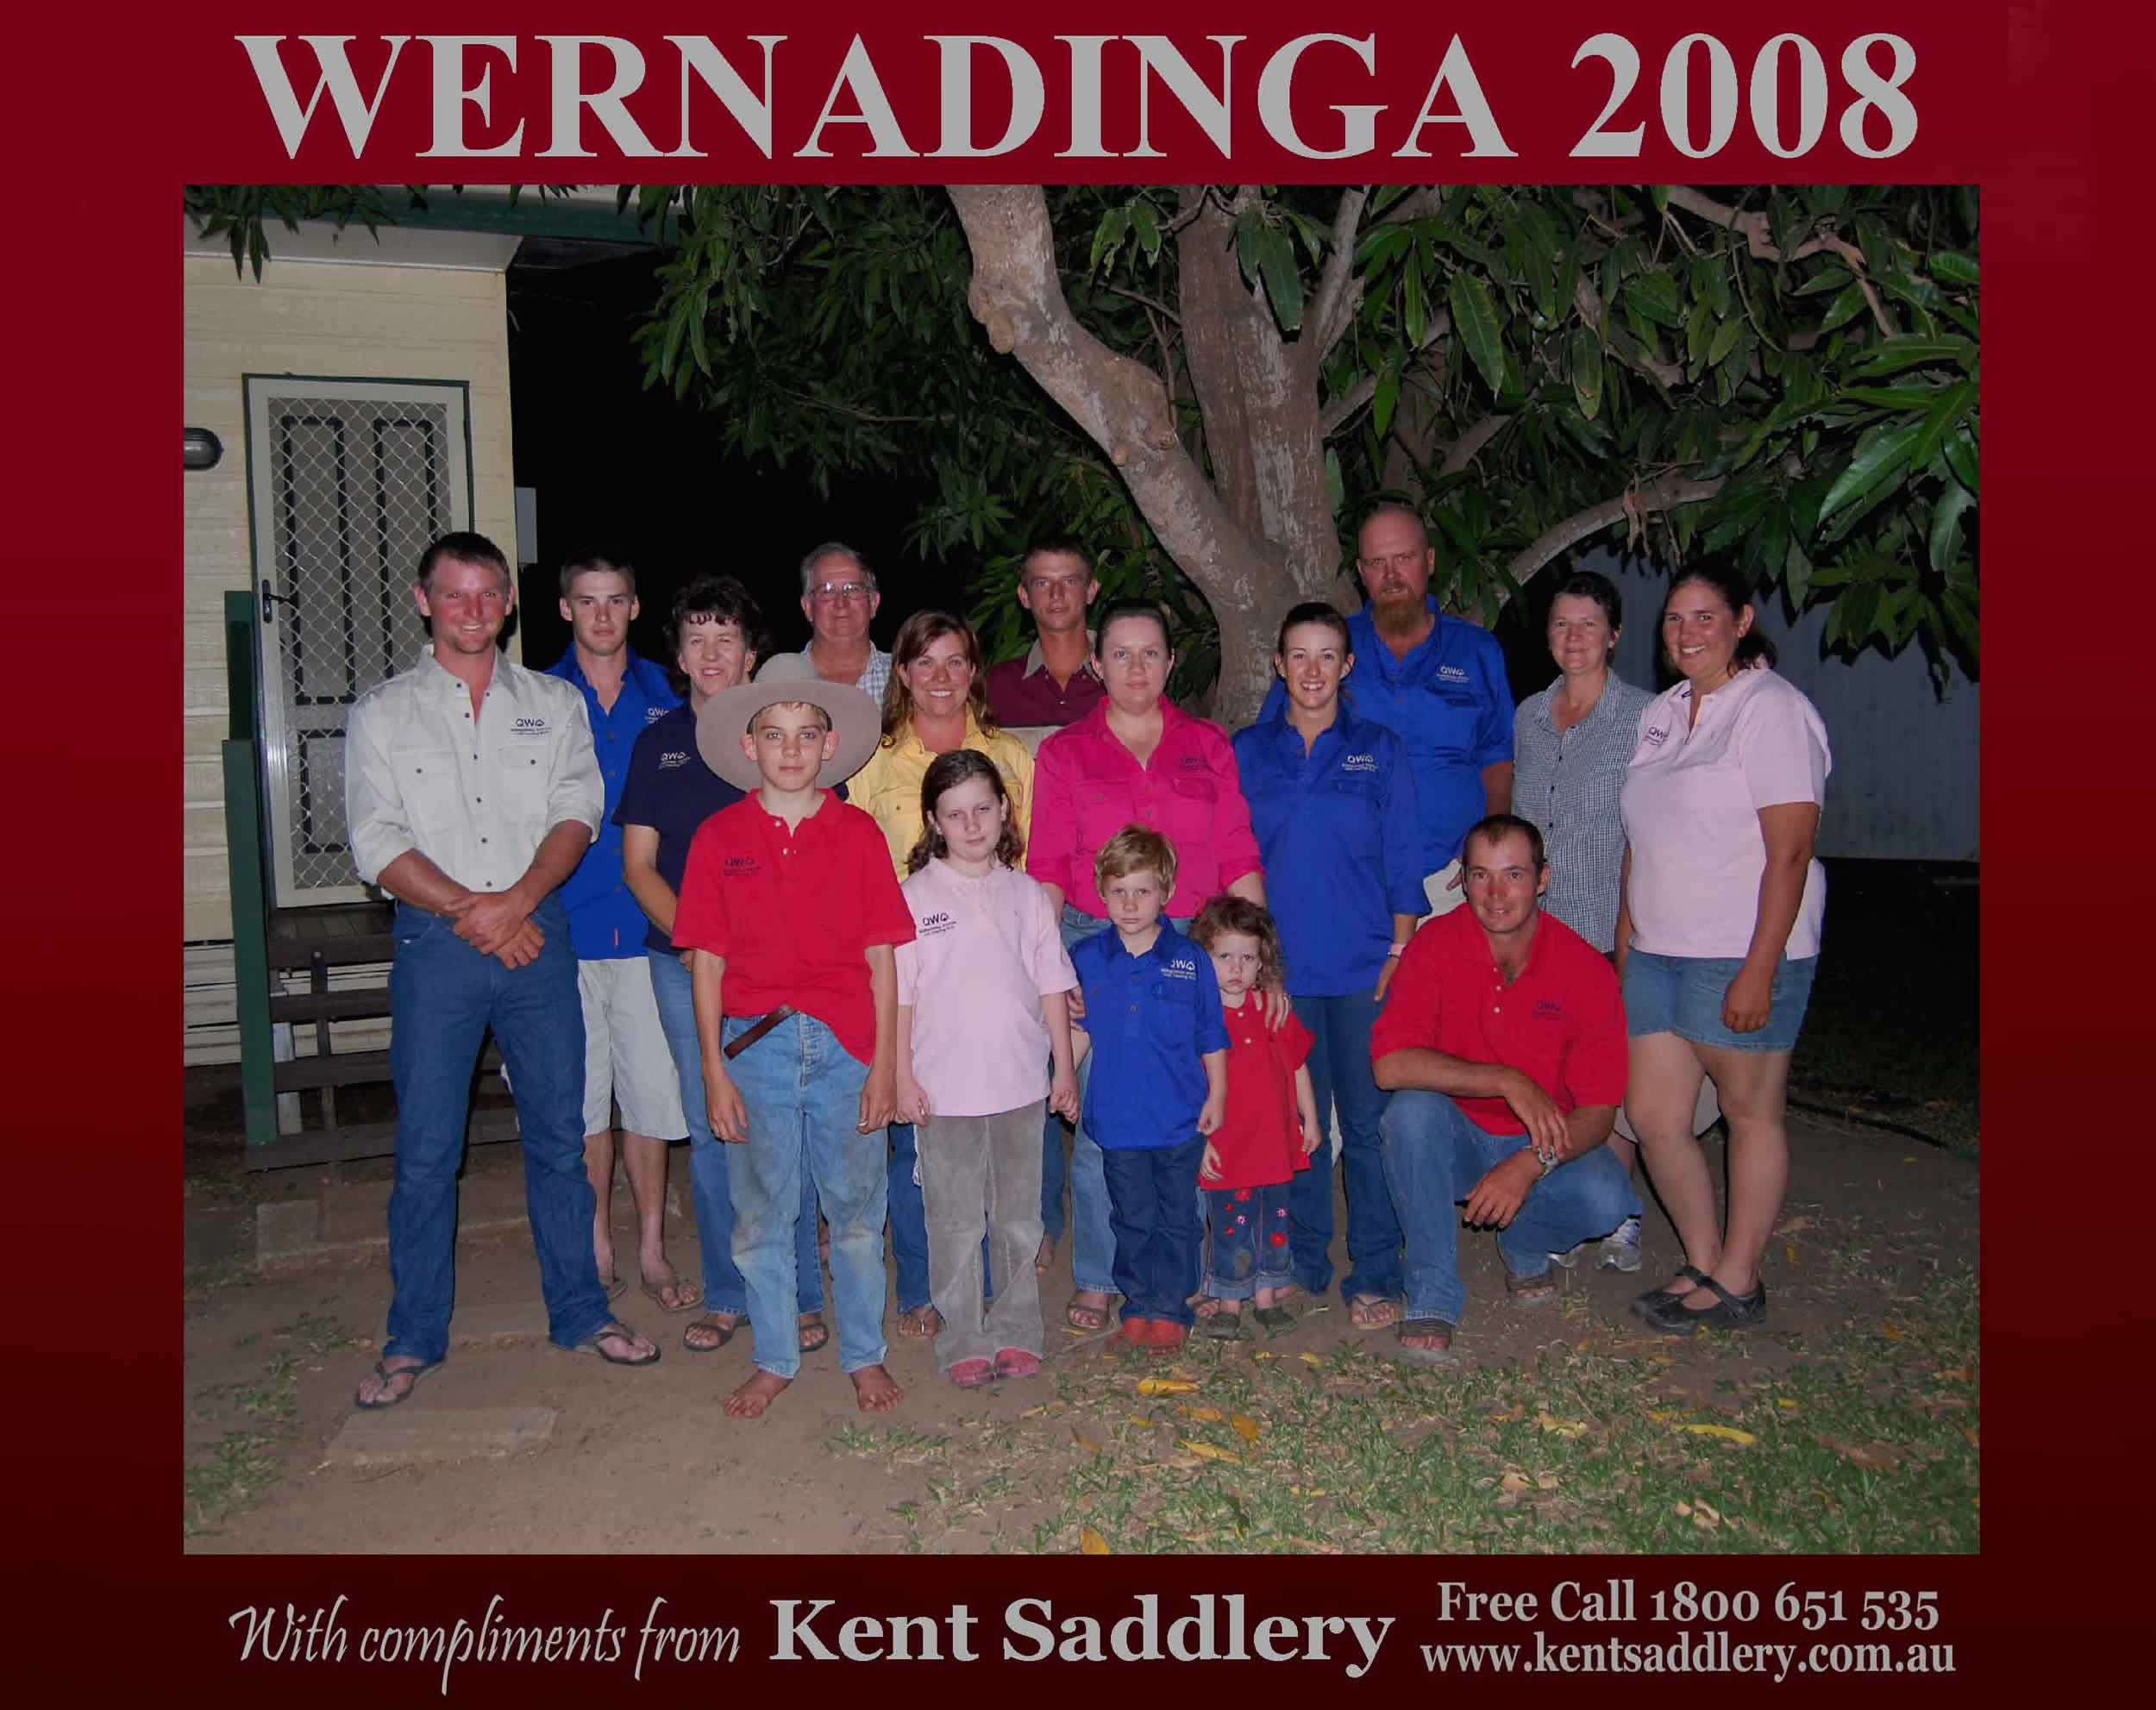 Queensland - Wernadinga 26